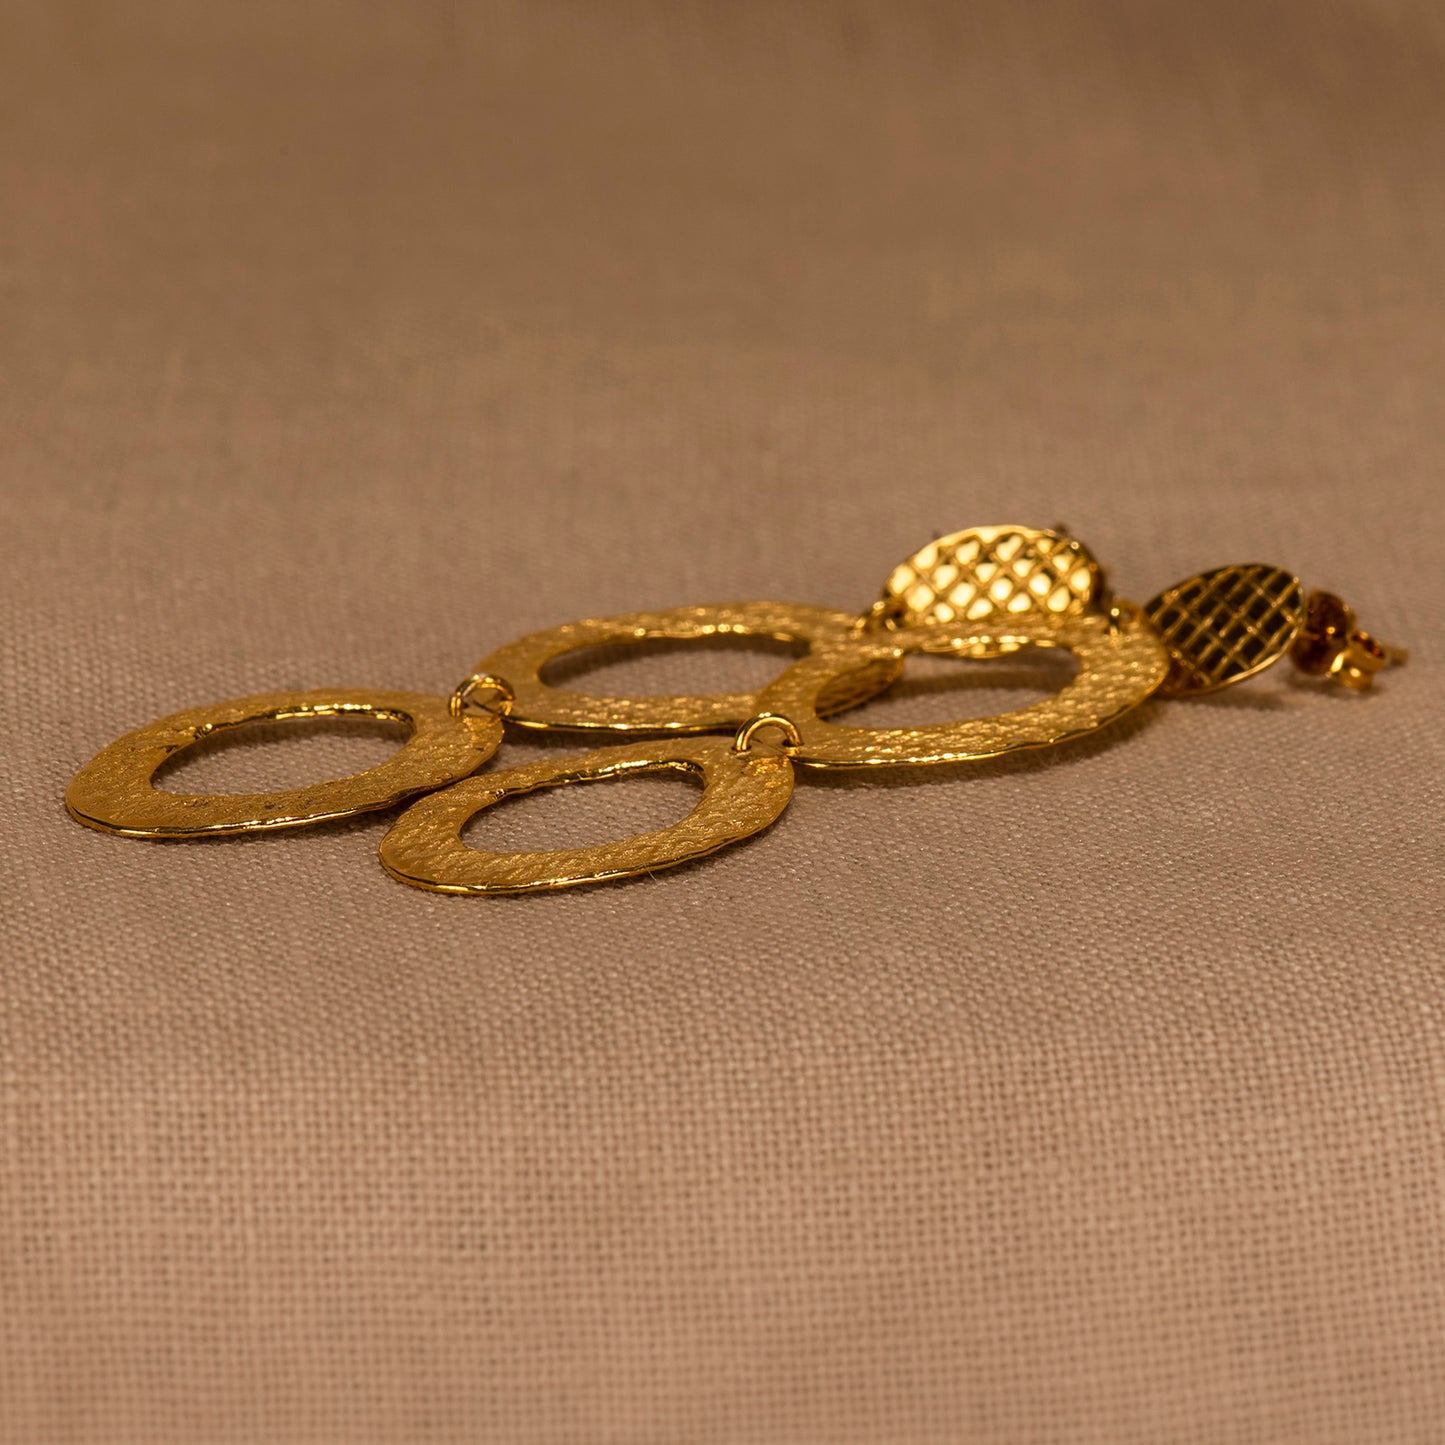 Oval gold plated sterling silver earrings (II)